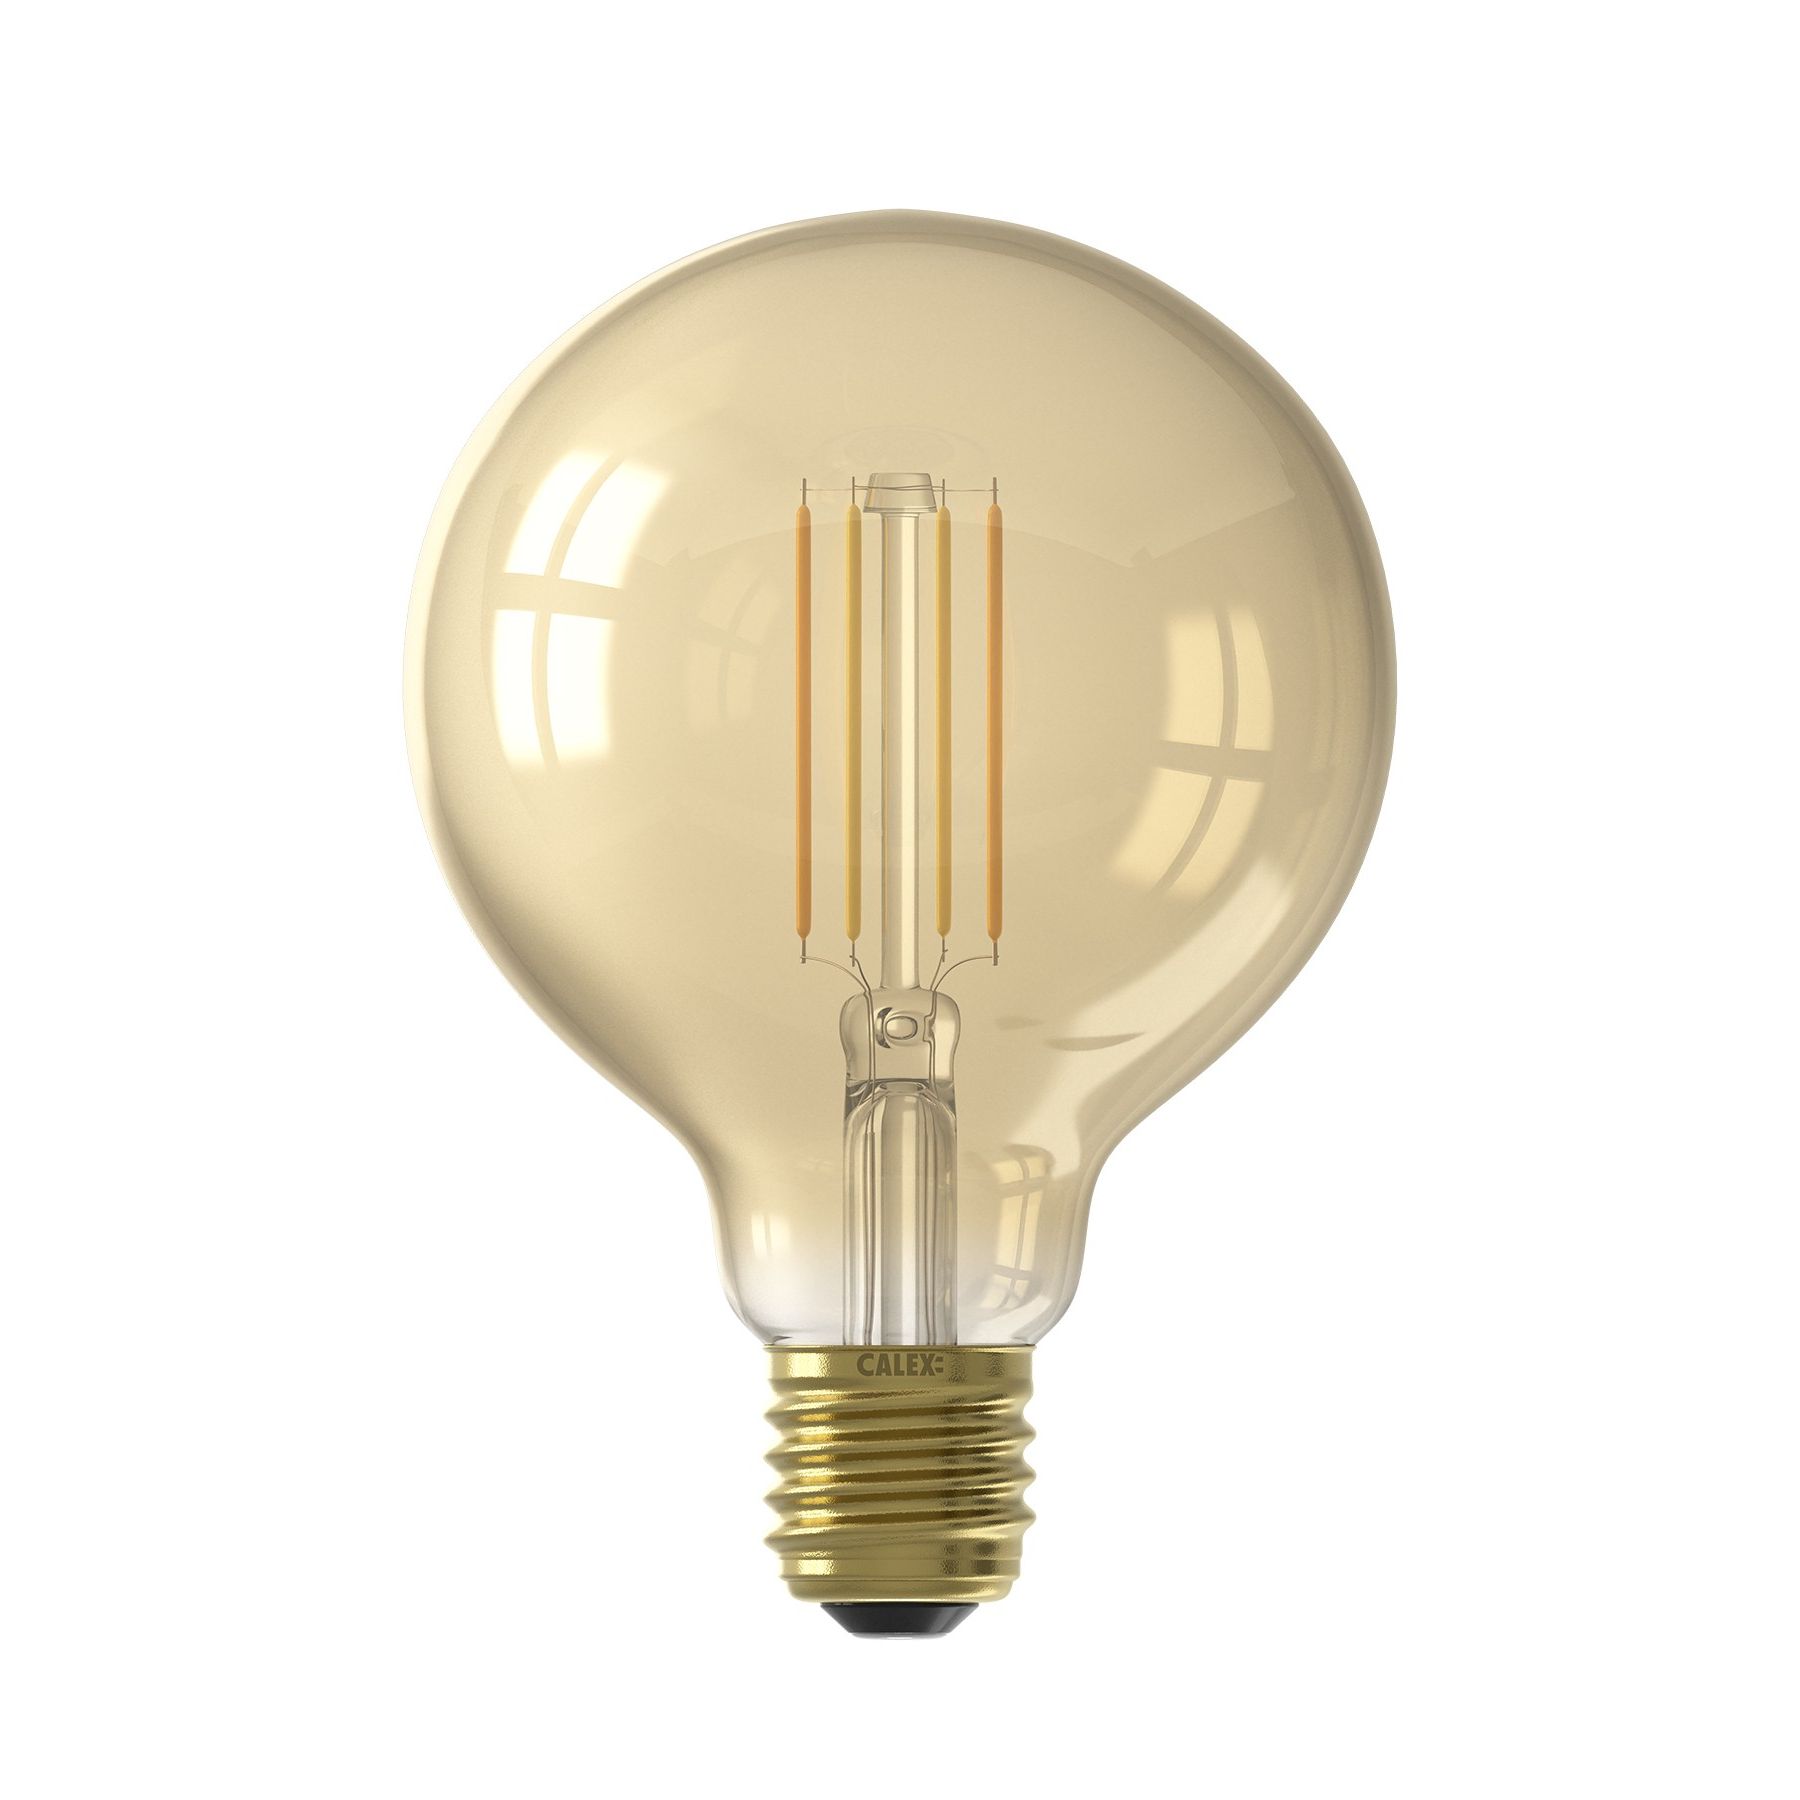 Calex LED lamp - Ø 9,5 14 cm - E27 - 7W - dimfunctie via app - 1800 tot 3000K white ambiance | Lichtkoning